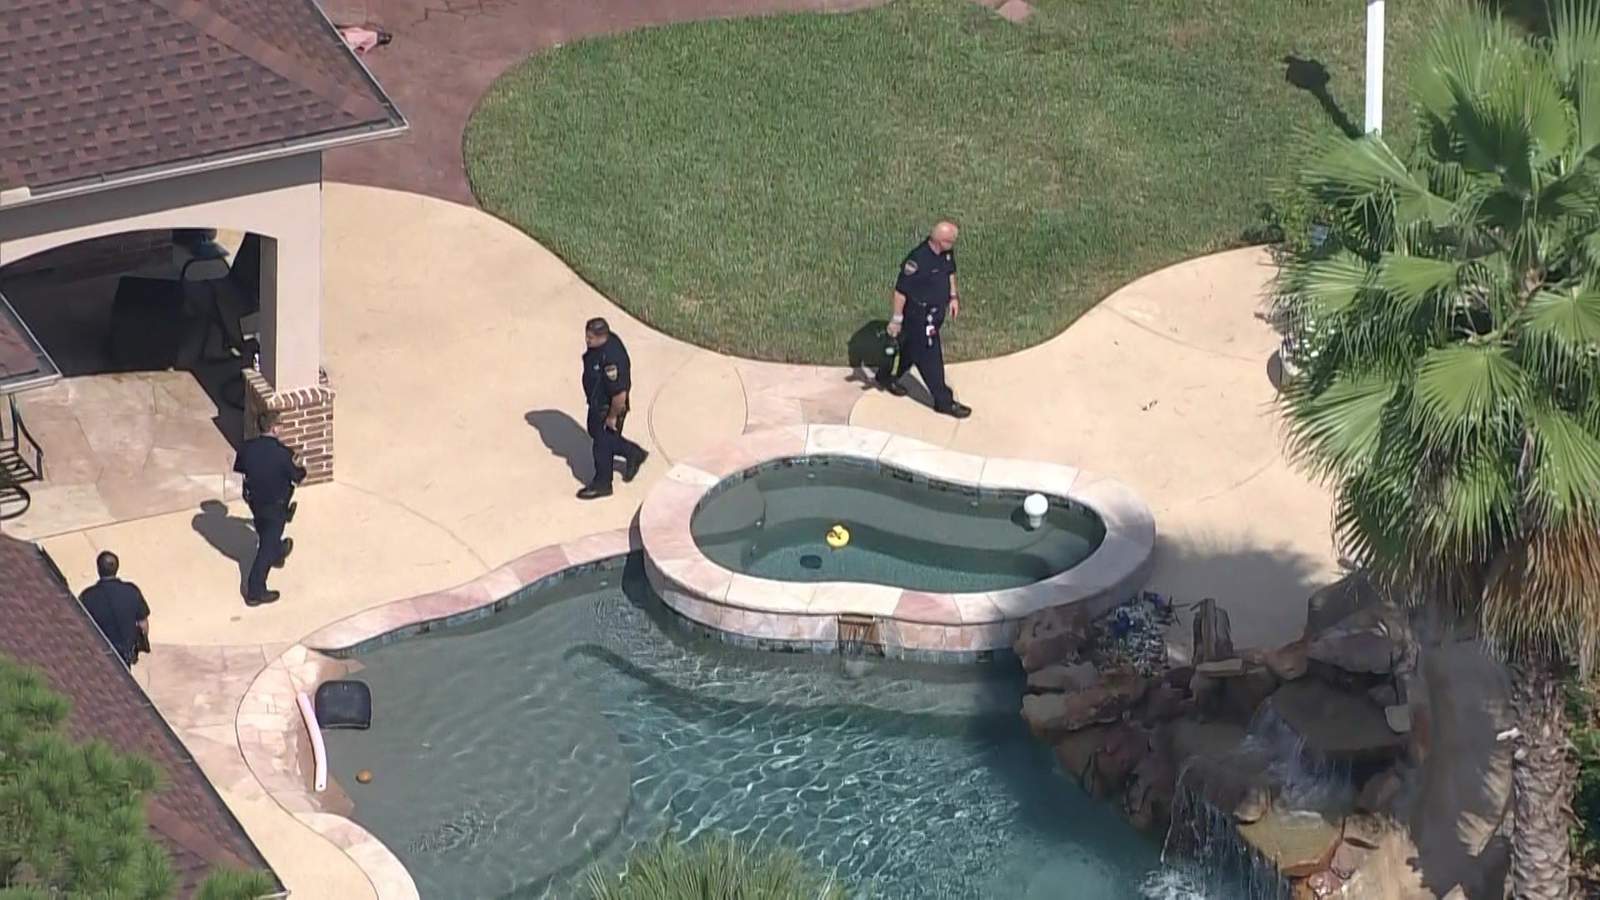 Boy found unresponsive in hot tub in Montgomery County dies, deputies say